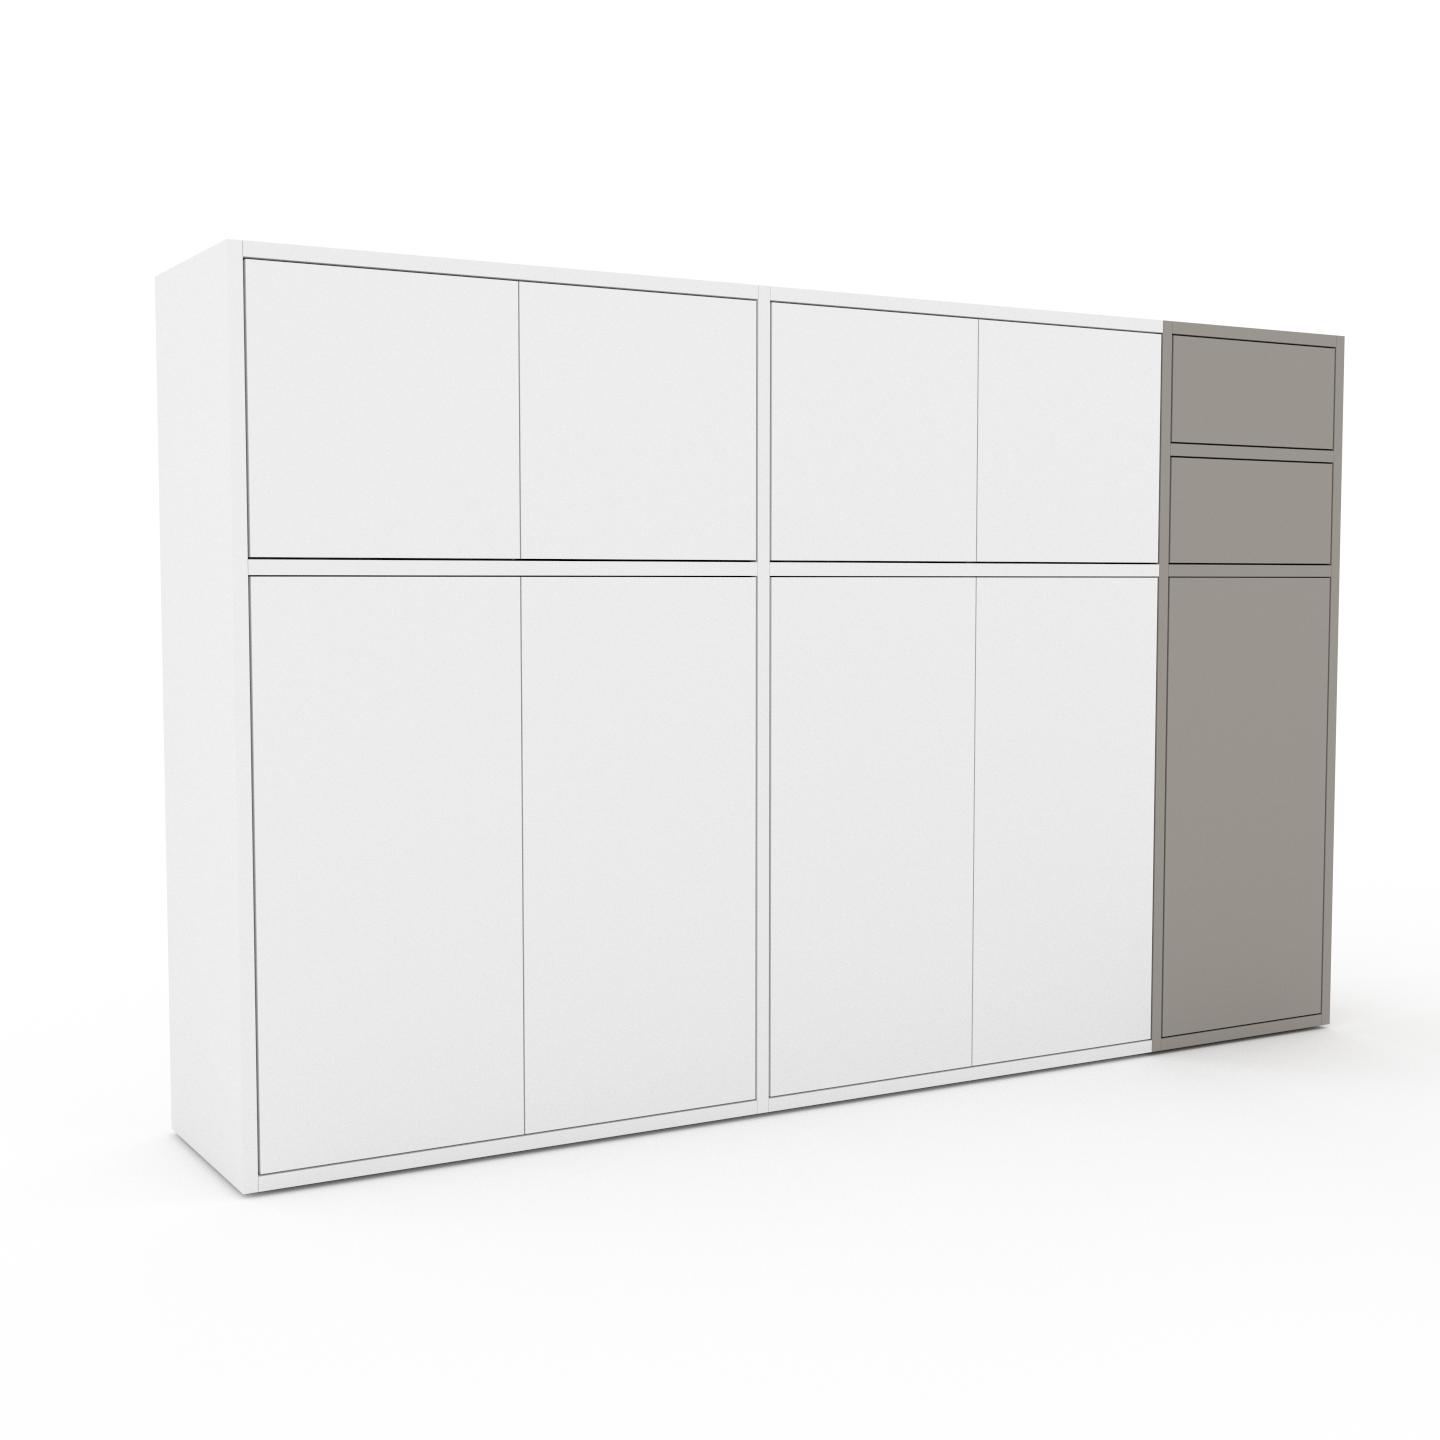 MYCS Enfilade - Blanc, design, buffet, avec porte Blanc et tiroir Gris sable - 190 x 118 x 35 cm